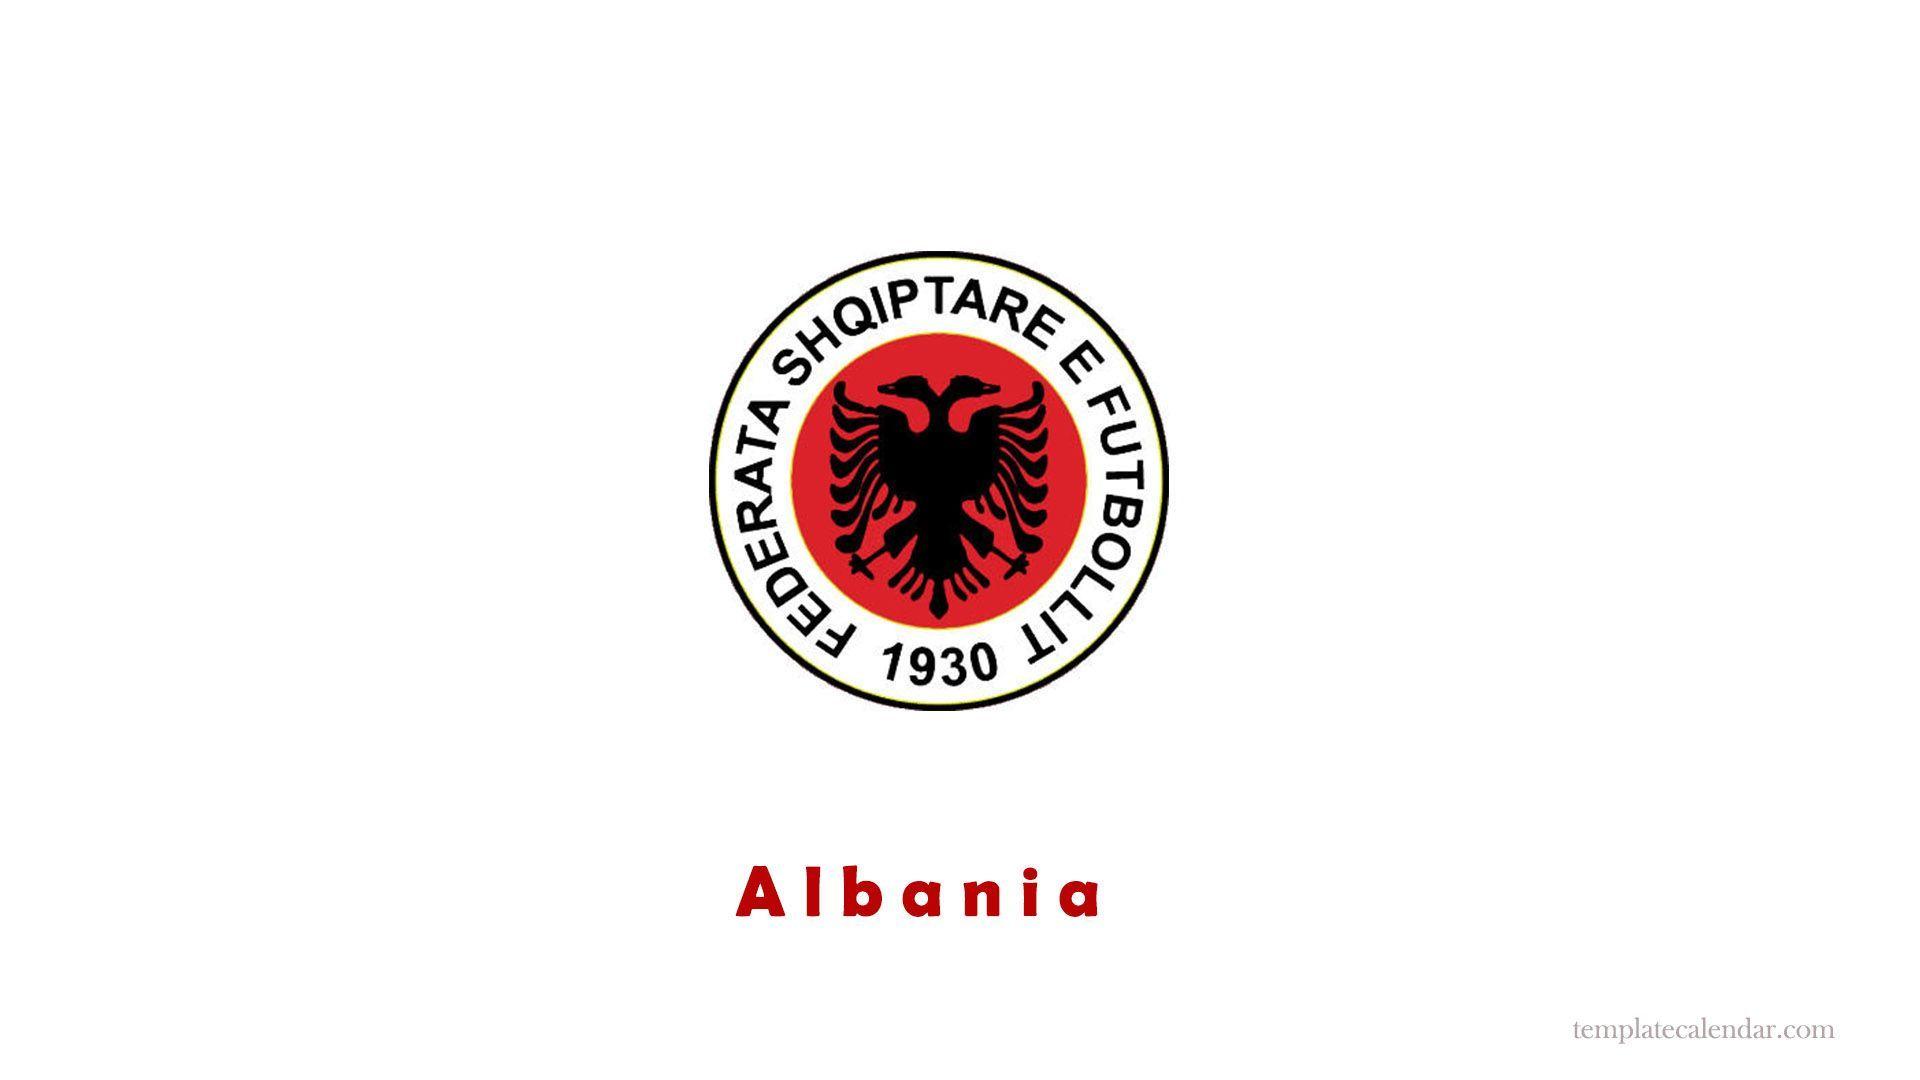 Albania National Football Team Wallpaper Wallpaper